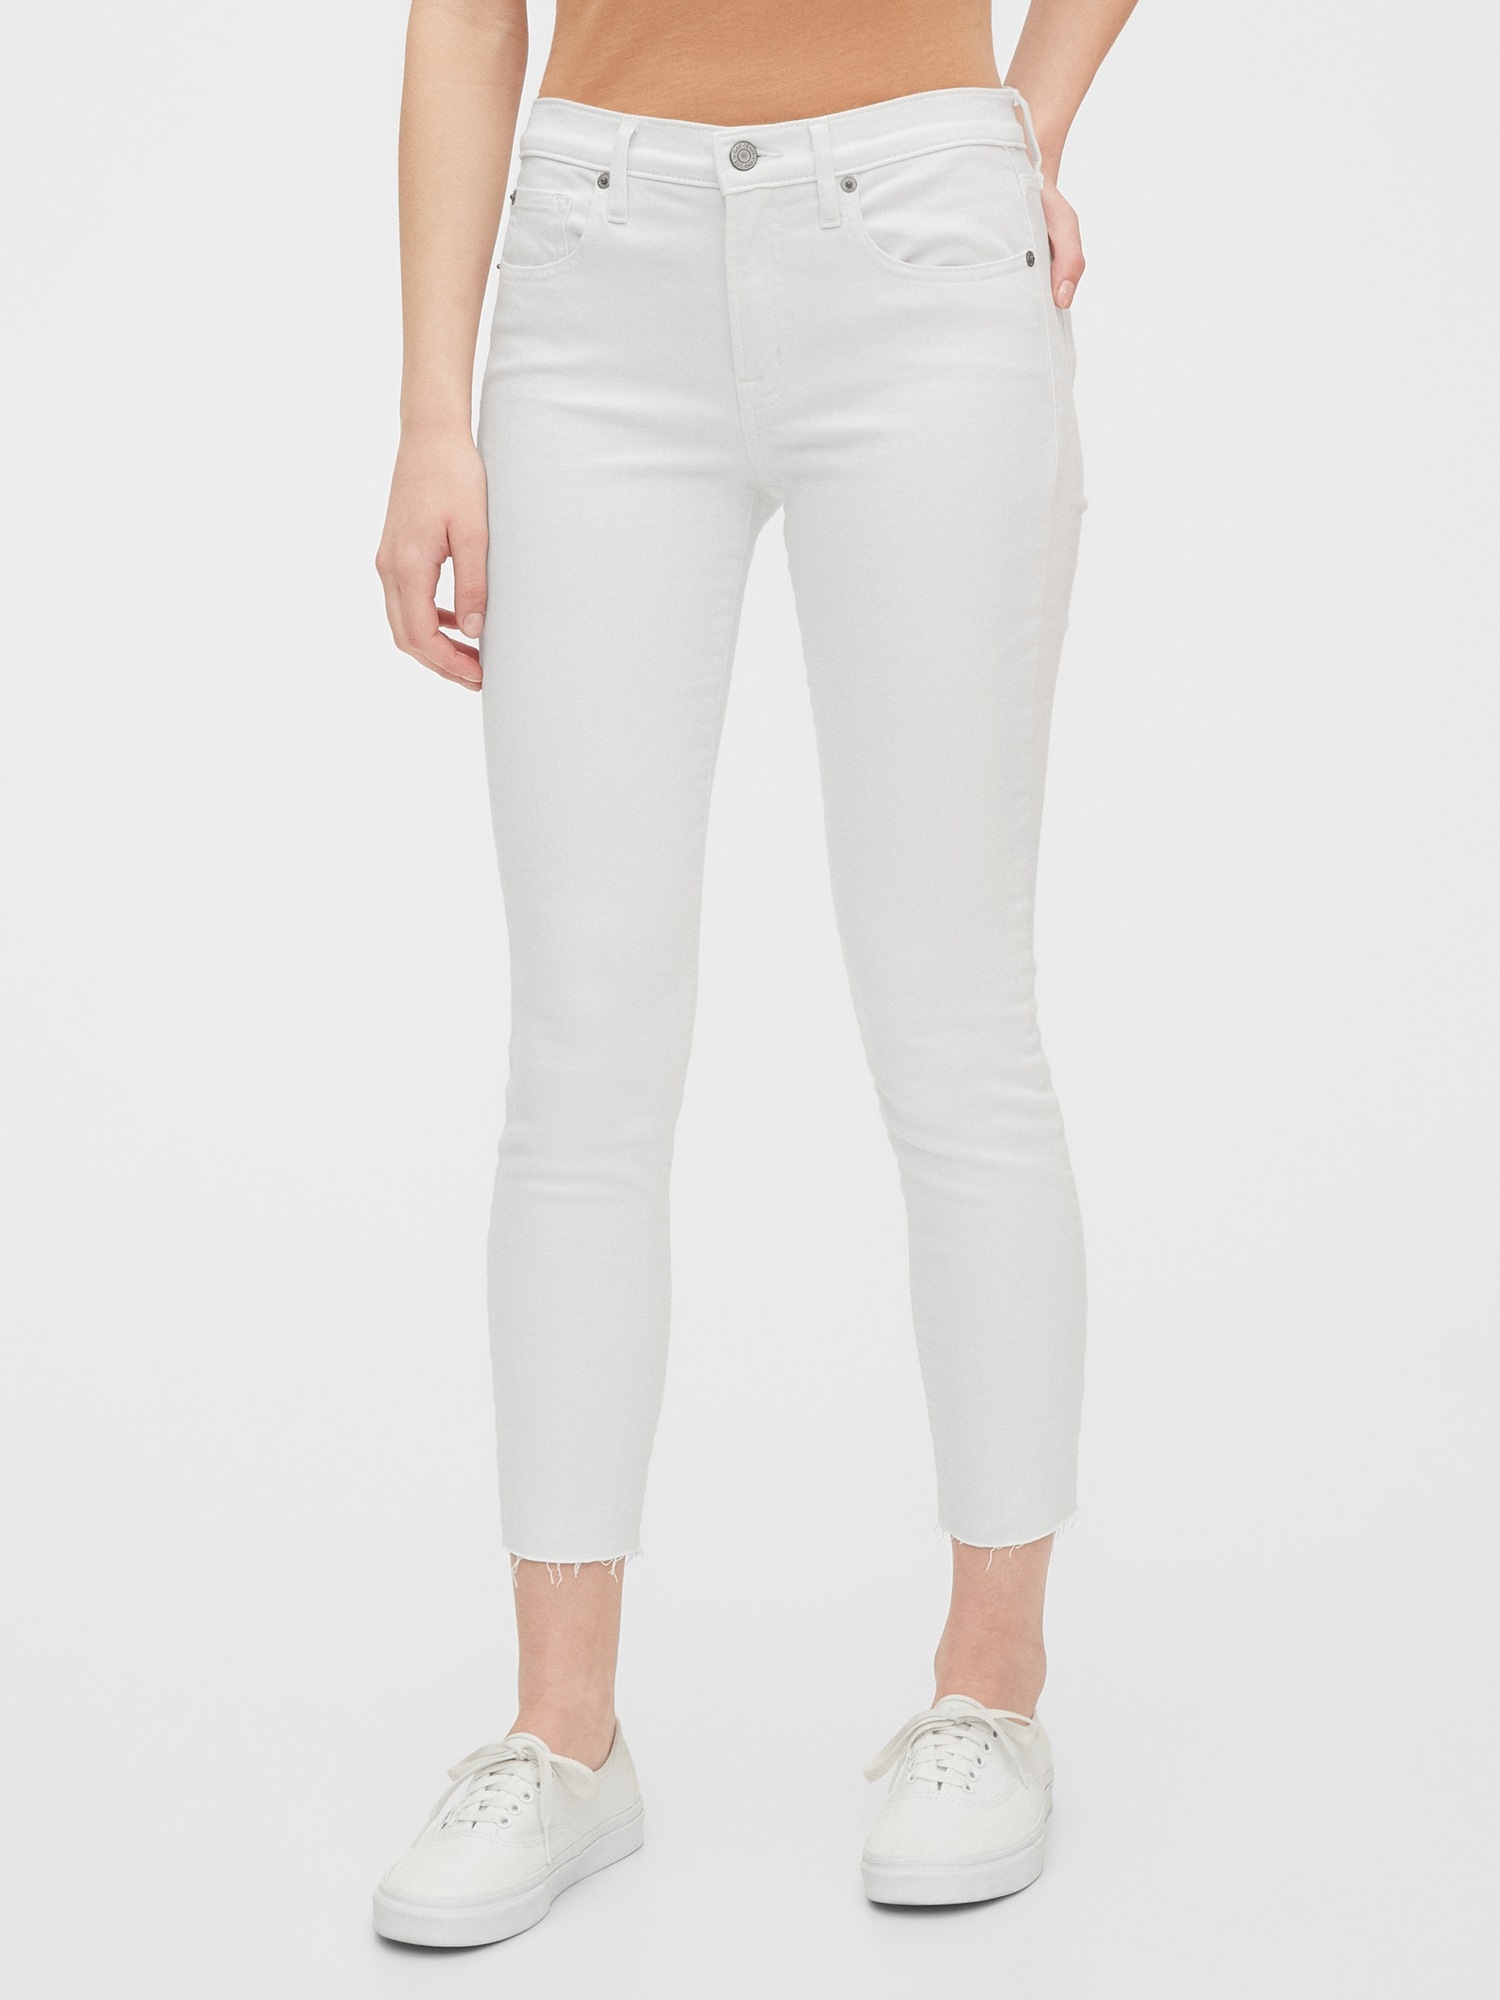 gap white skinny jeans